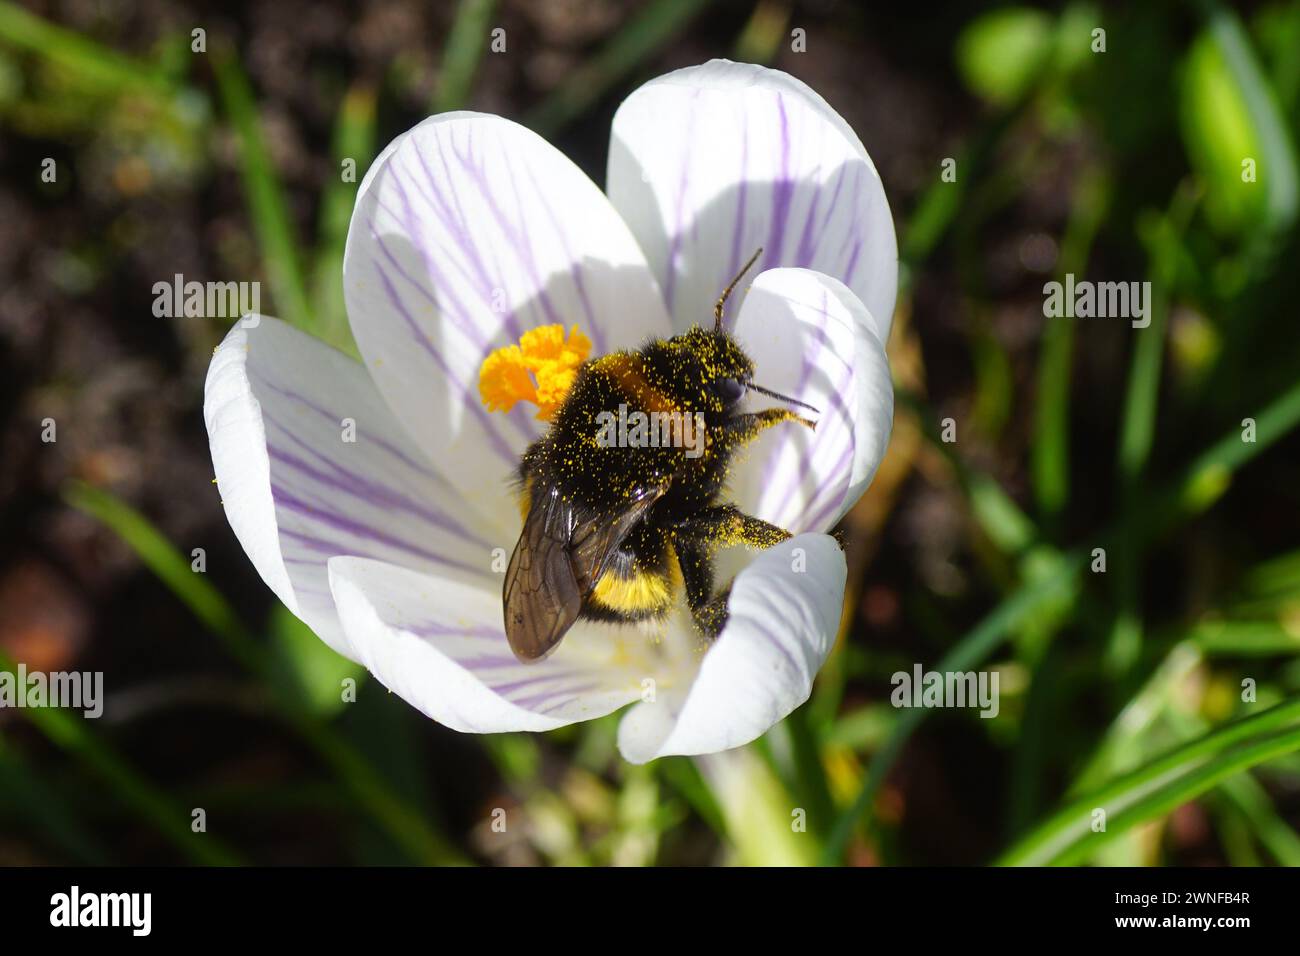 Queen, bumblebee species in the Bombus lucorum-complex covered with pollen on white, purple flower of a Crocus. Dutch garden. March, winter, sprinspri Stock Photo